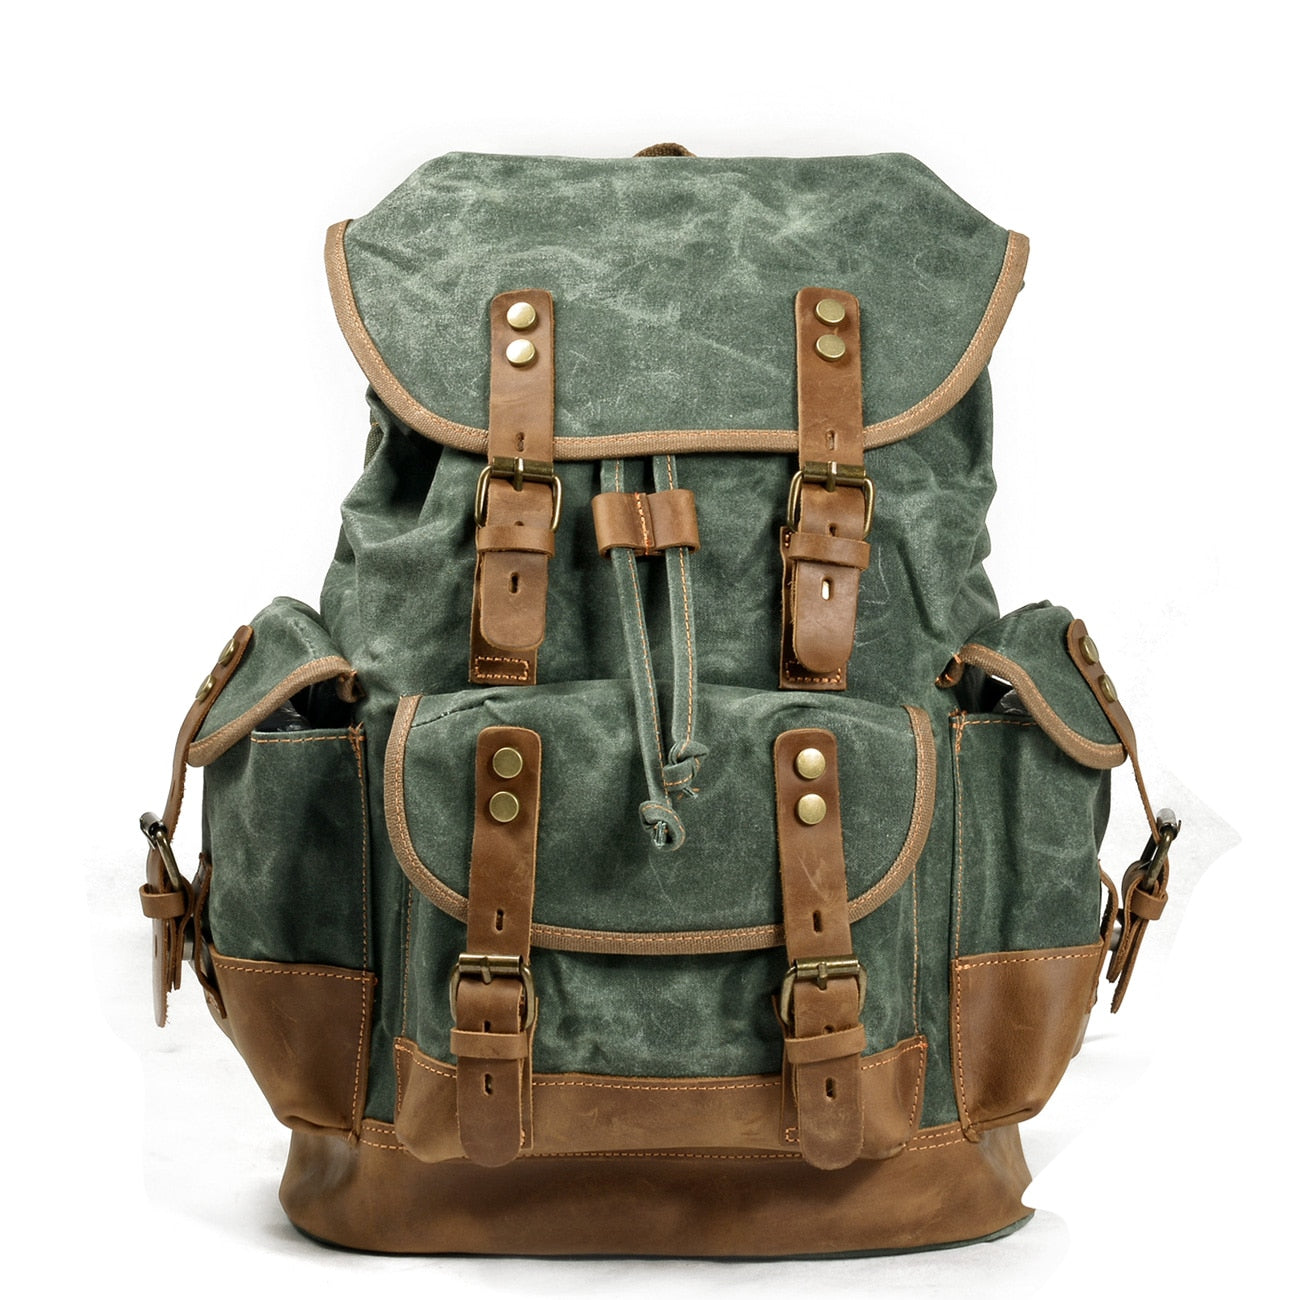 Waterproof Wax Canvas Backpack bright green